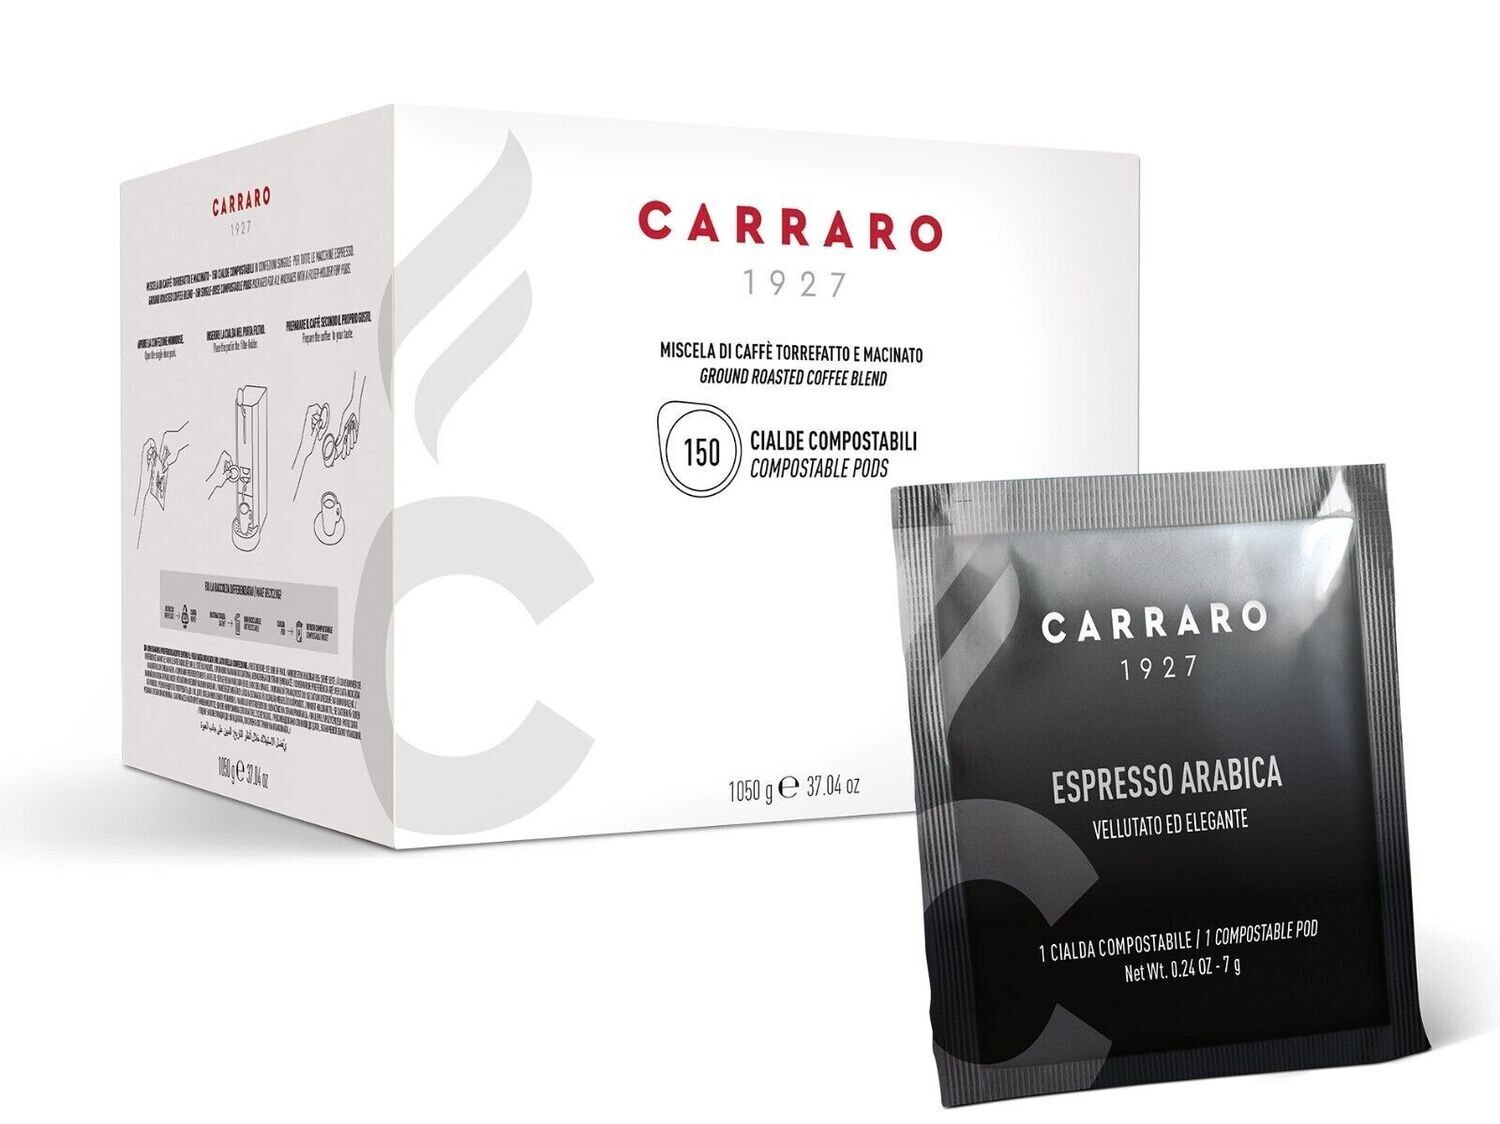 Carraro Espresso Arabica ESE Pads